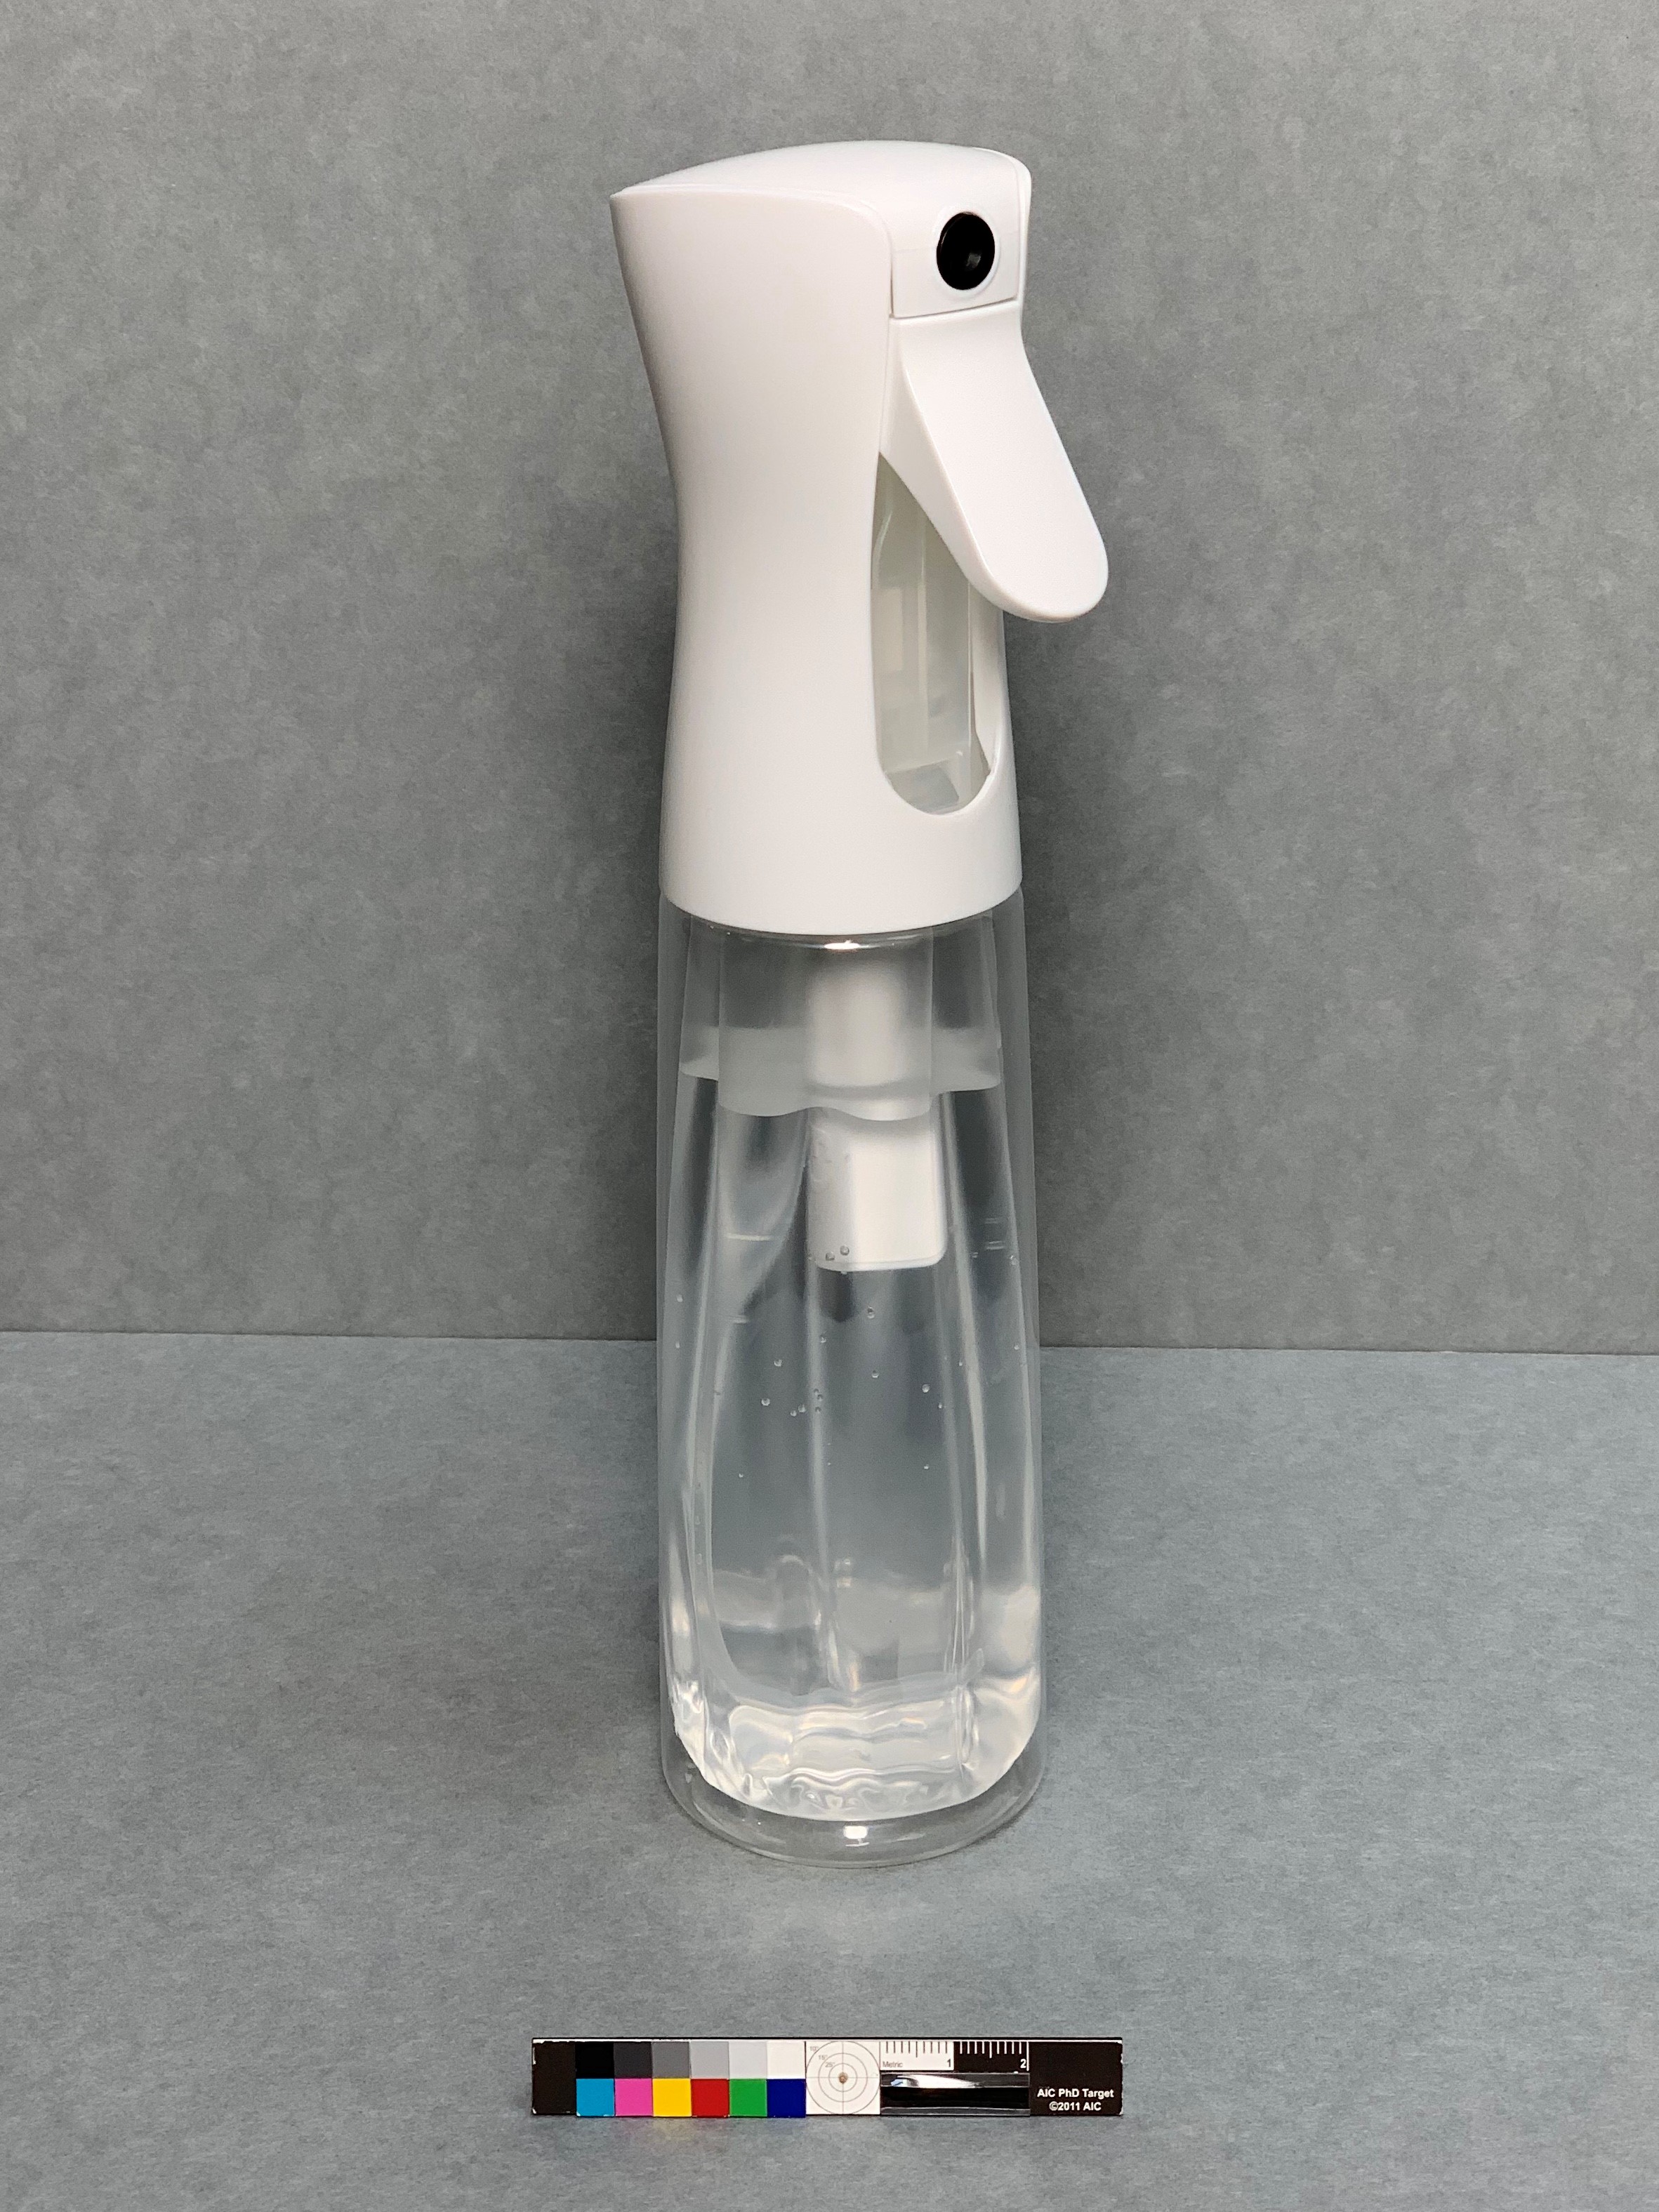 continuous spray bottle